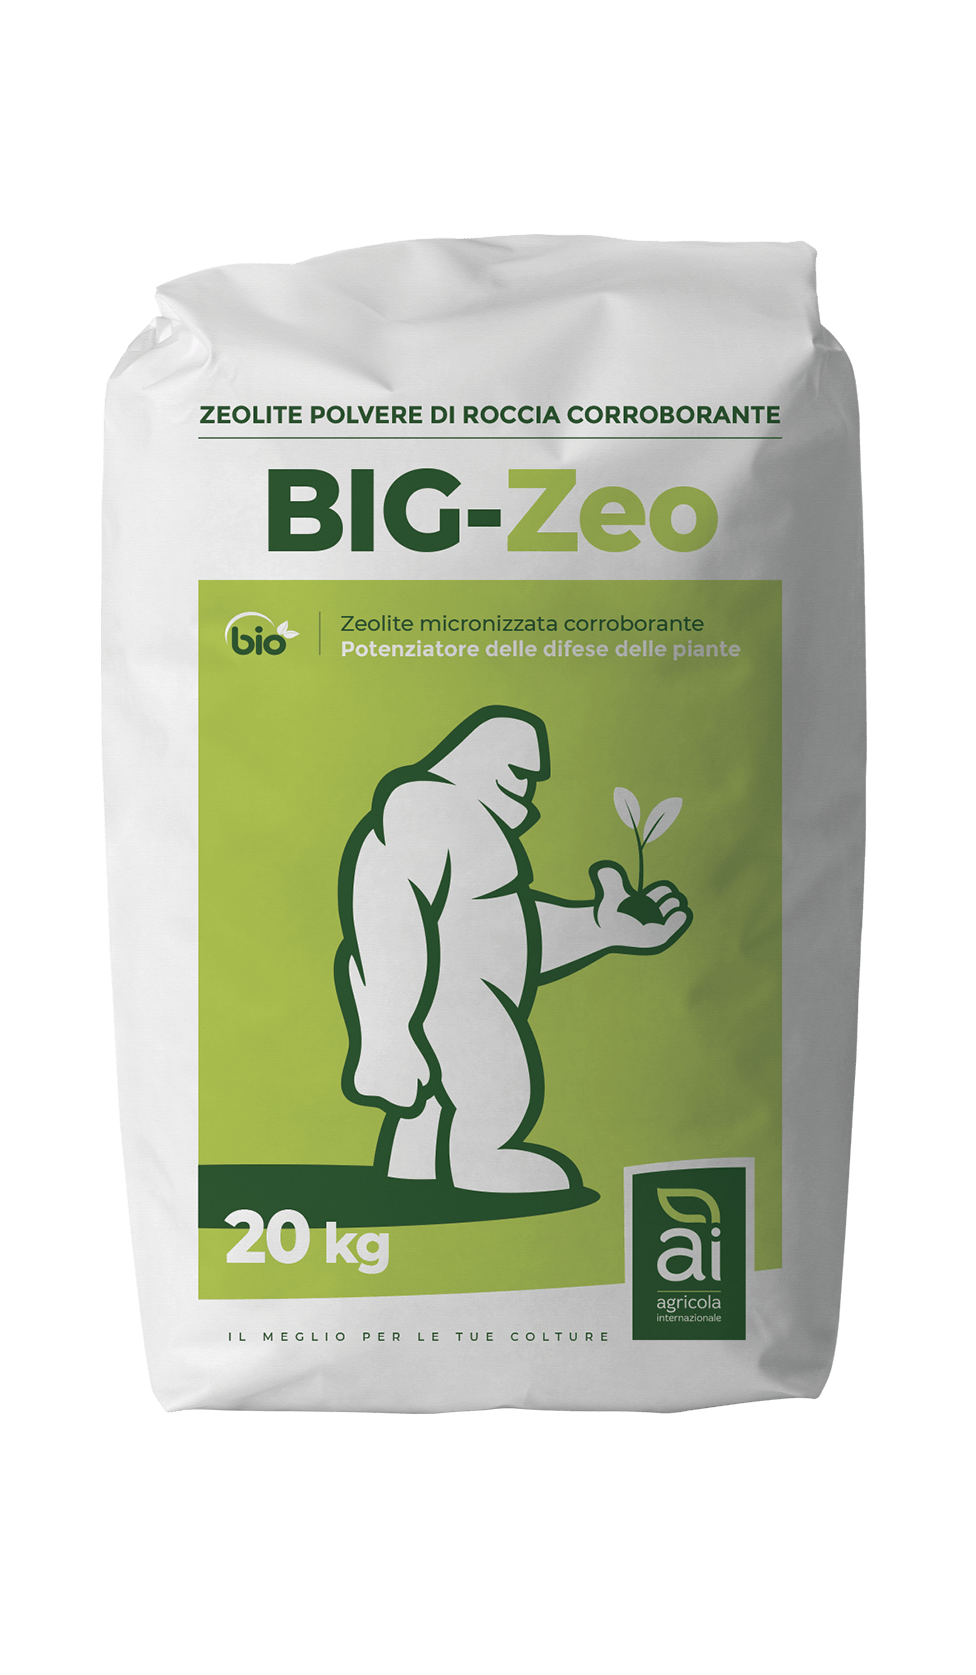 BIG-Zeo - Agricola Internazionale - Zeodry Zeolite Corroborante